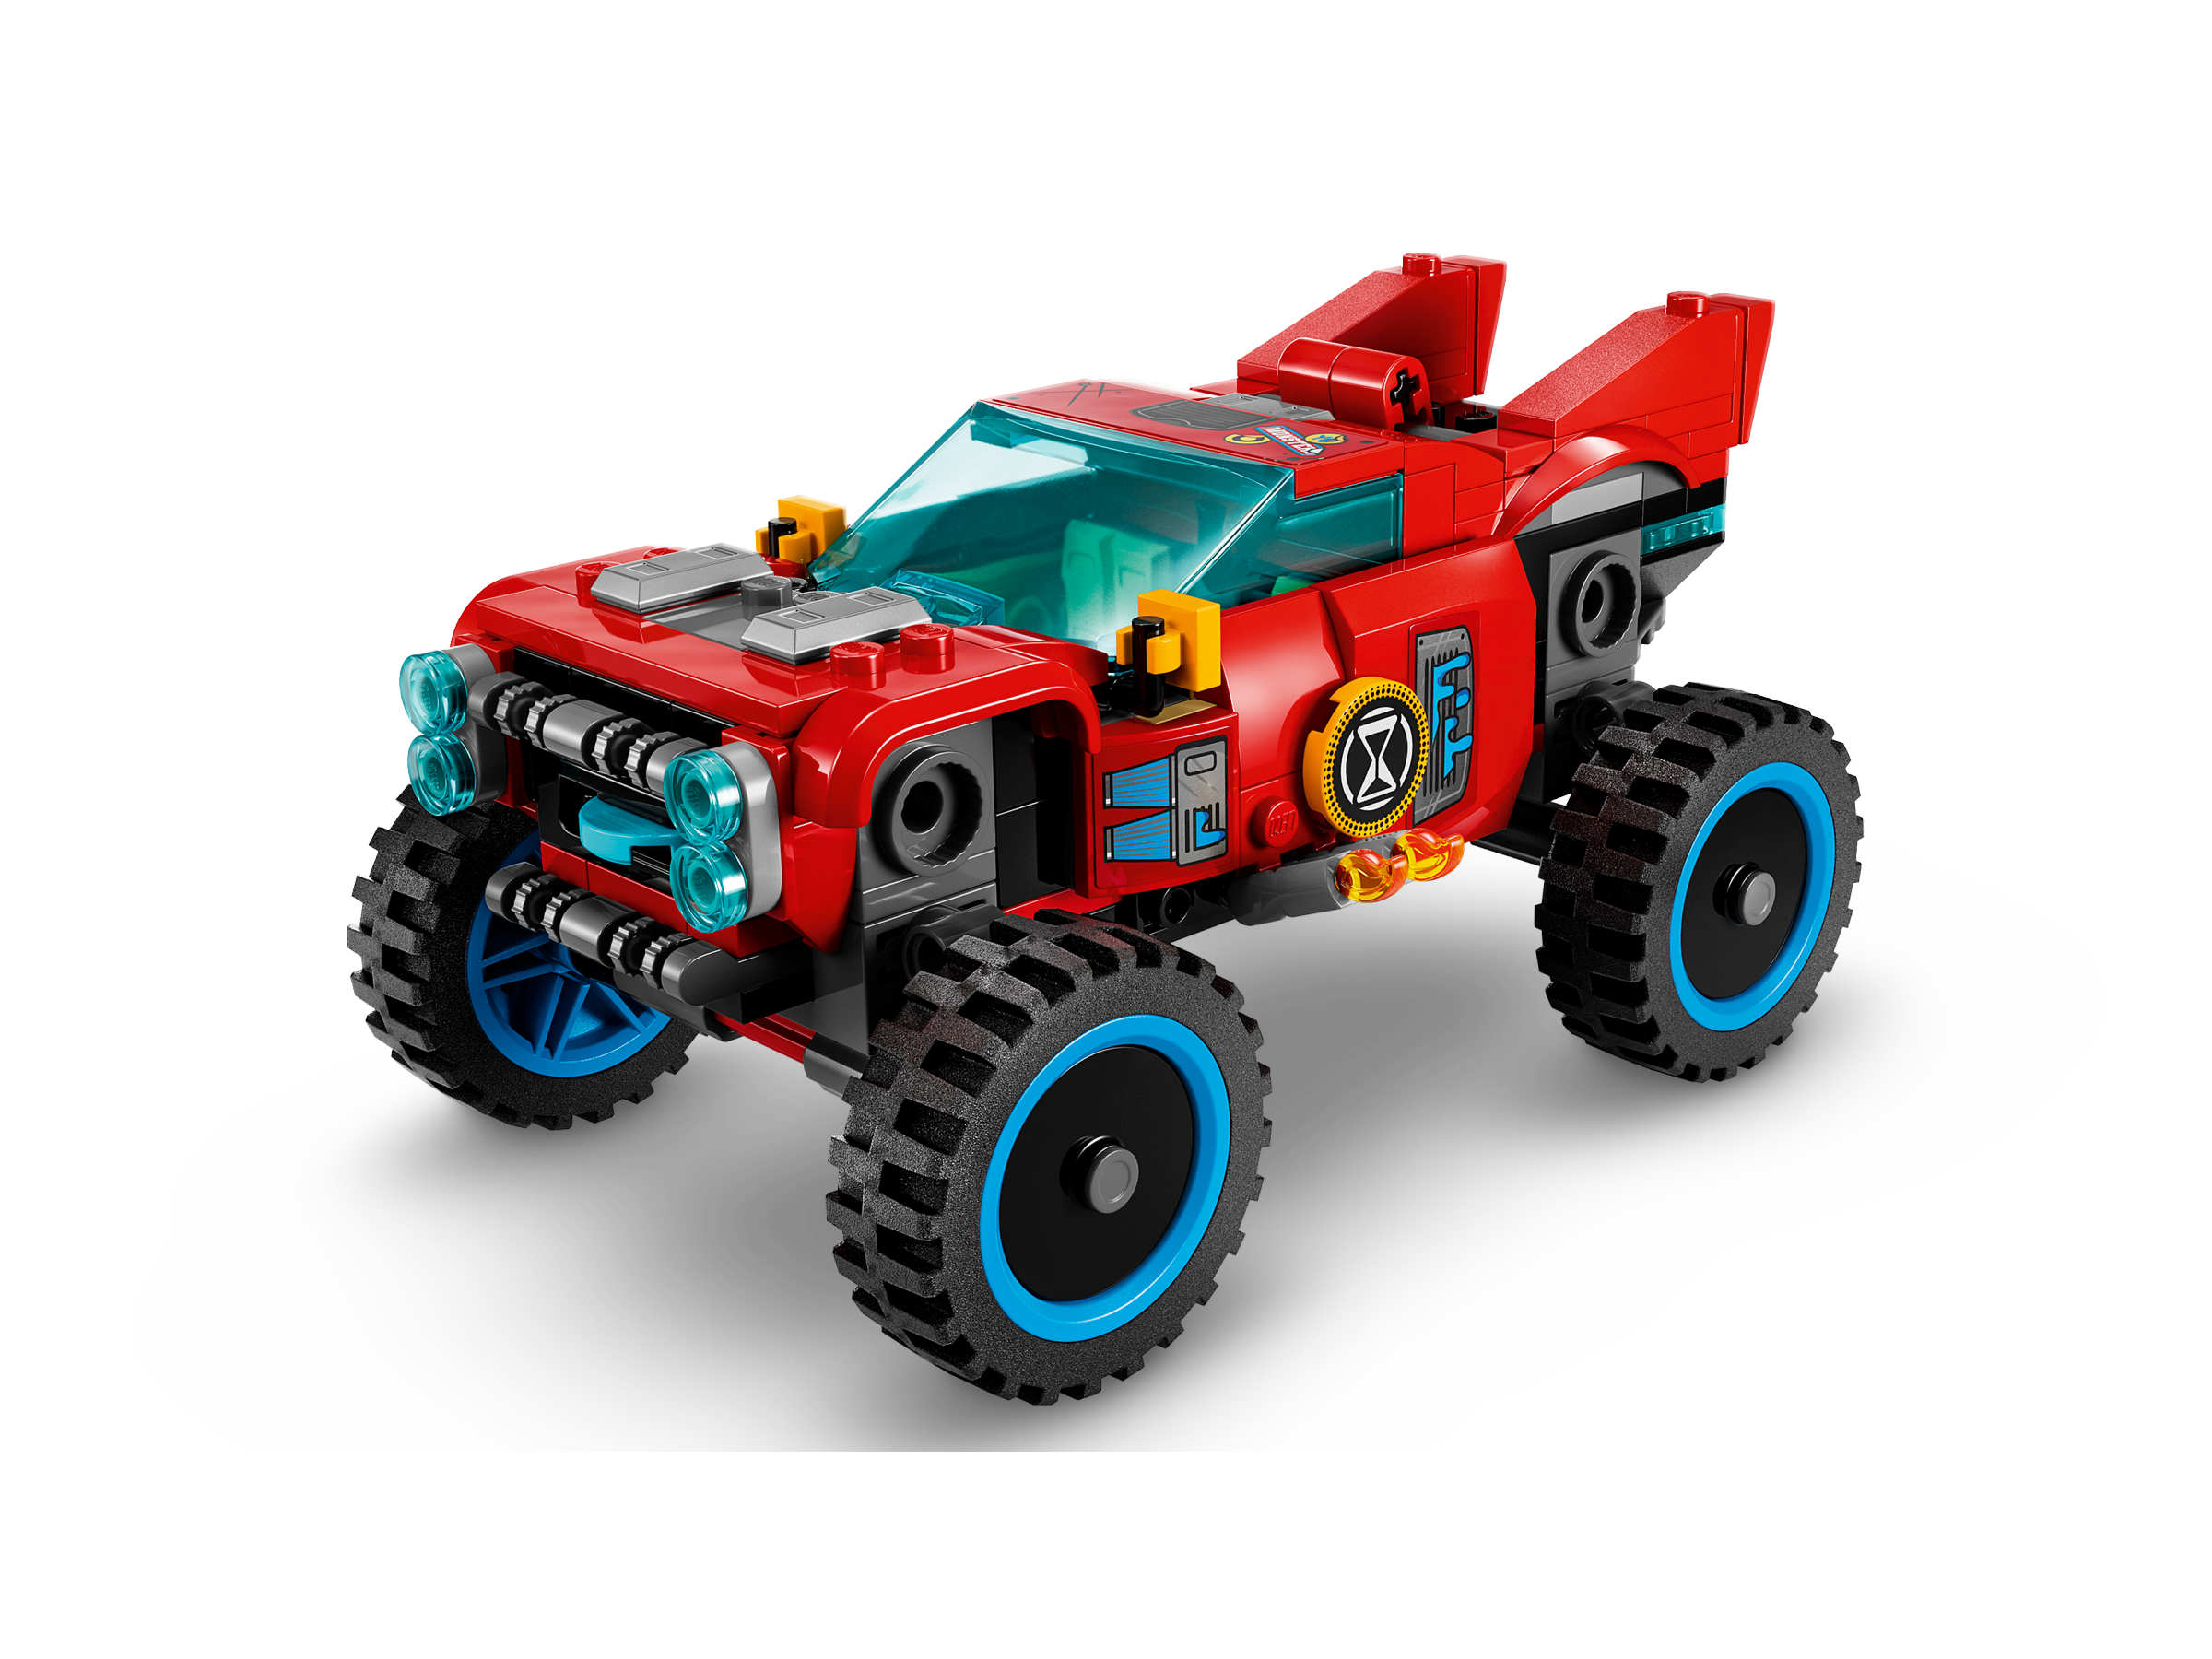 LEGO® DREAMZzz™ 71458 Crocodile Car